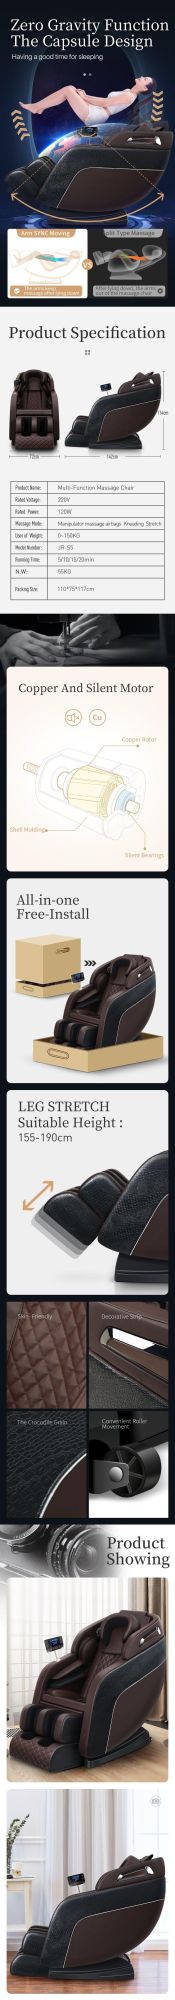 Latest Touch Screen Technology Massage Chair Cover Foot Massager Body Massage Chair